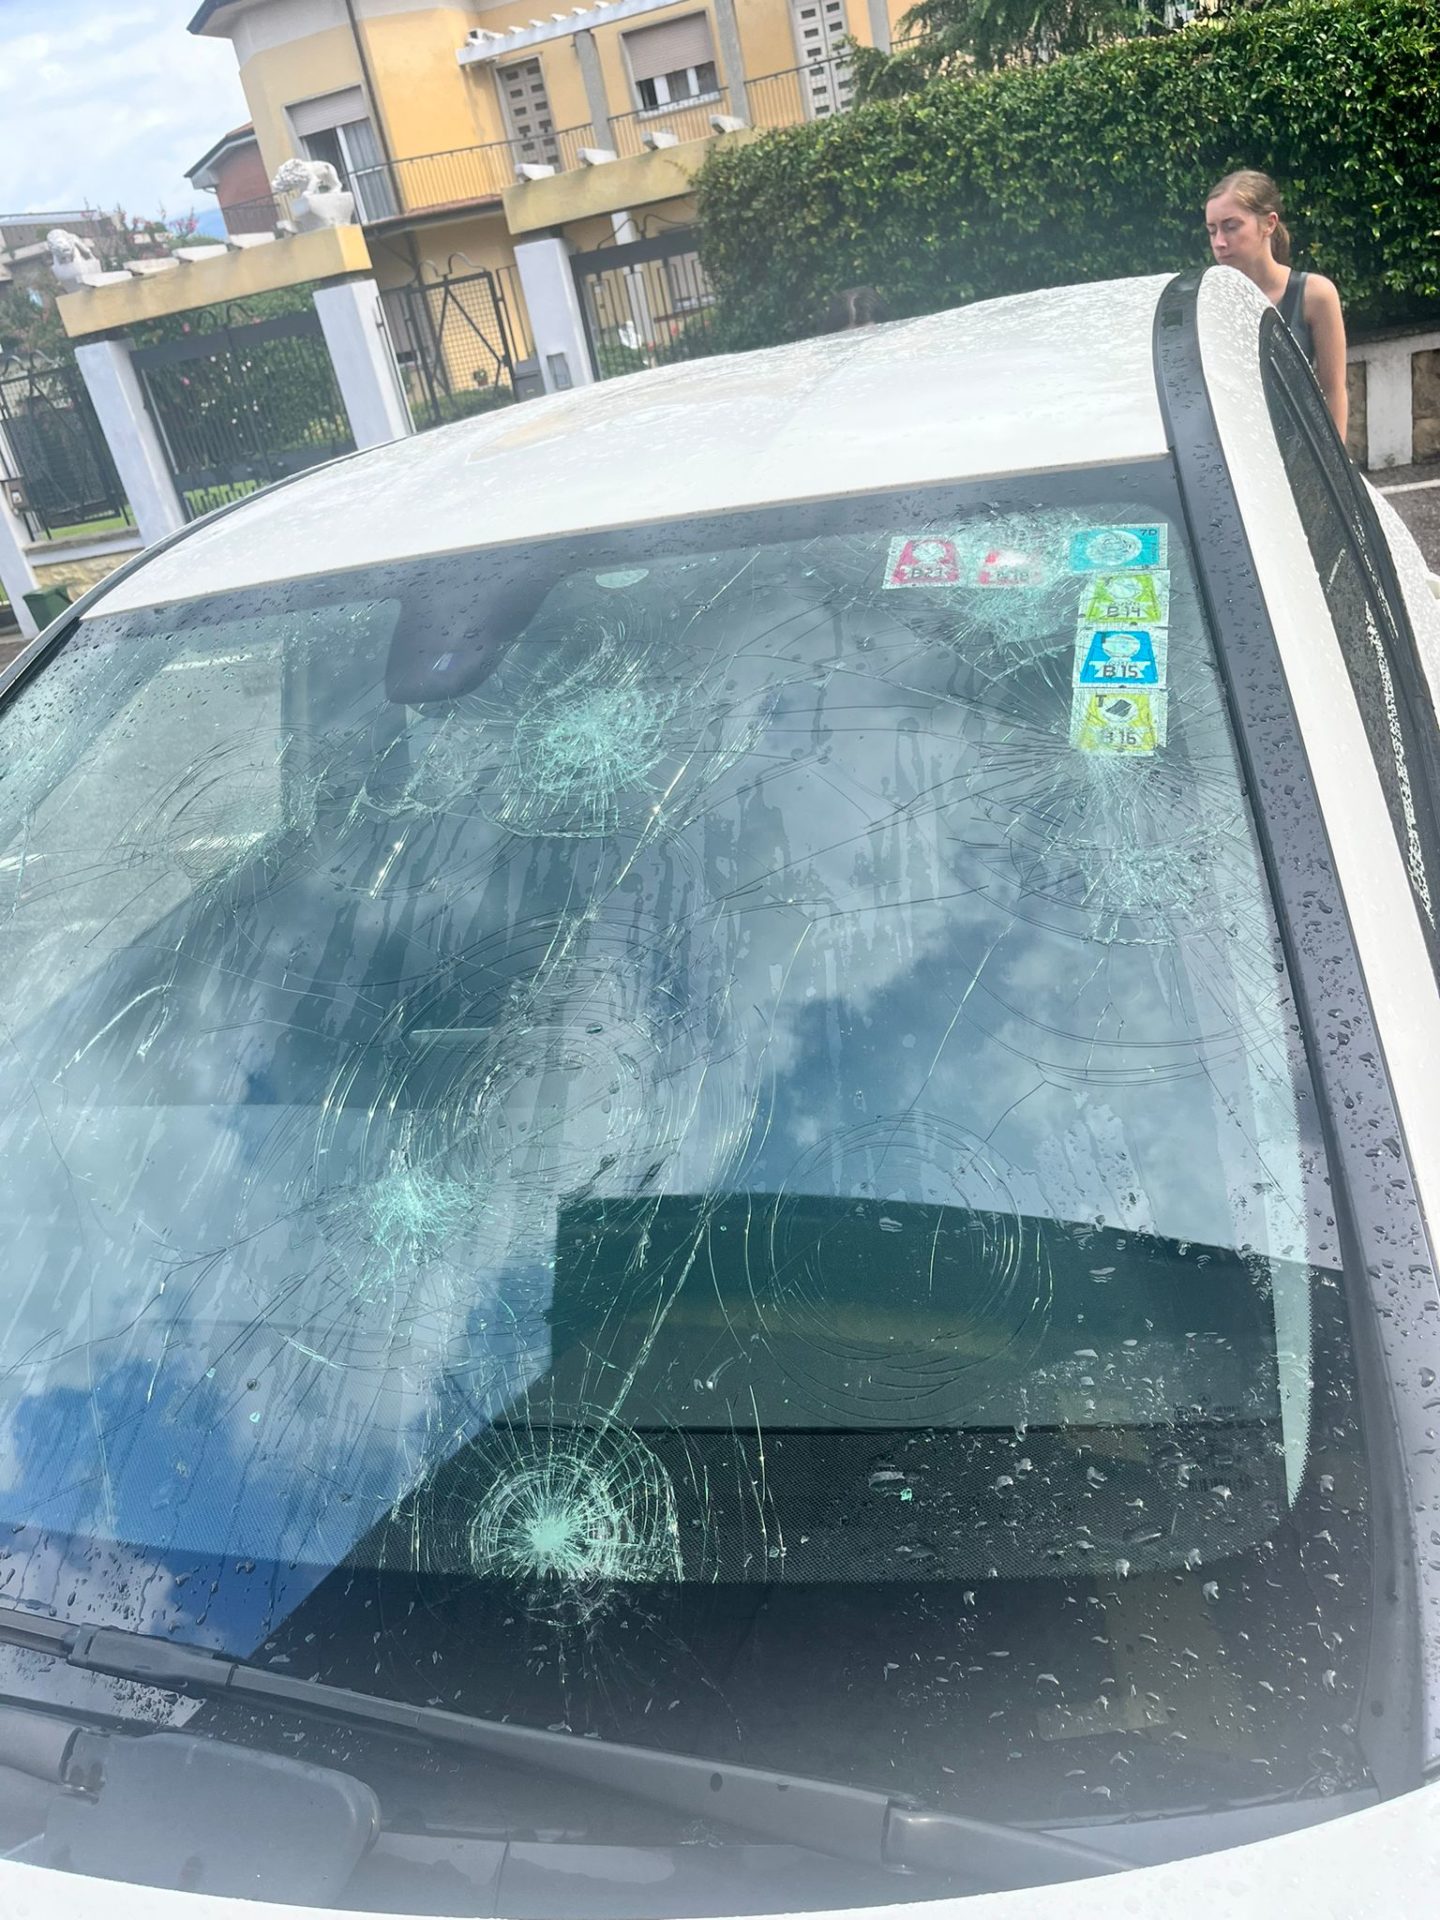 Car window from Peschiera, Lake Garda after hailstorm (Photo by Gráinne Smyth)